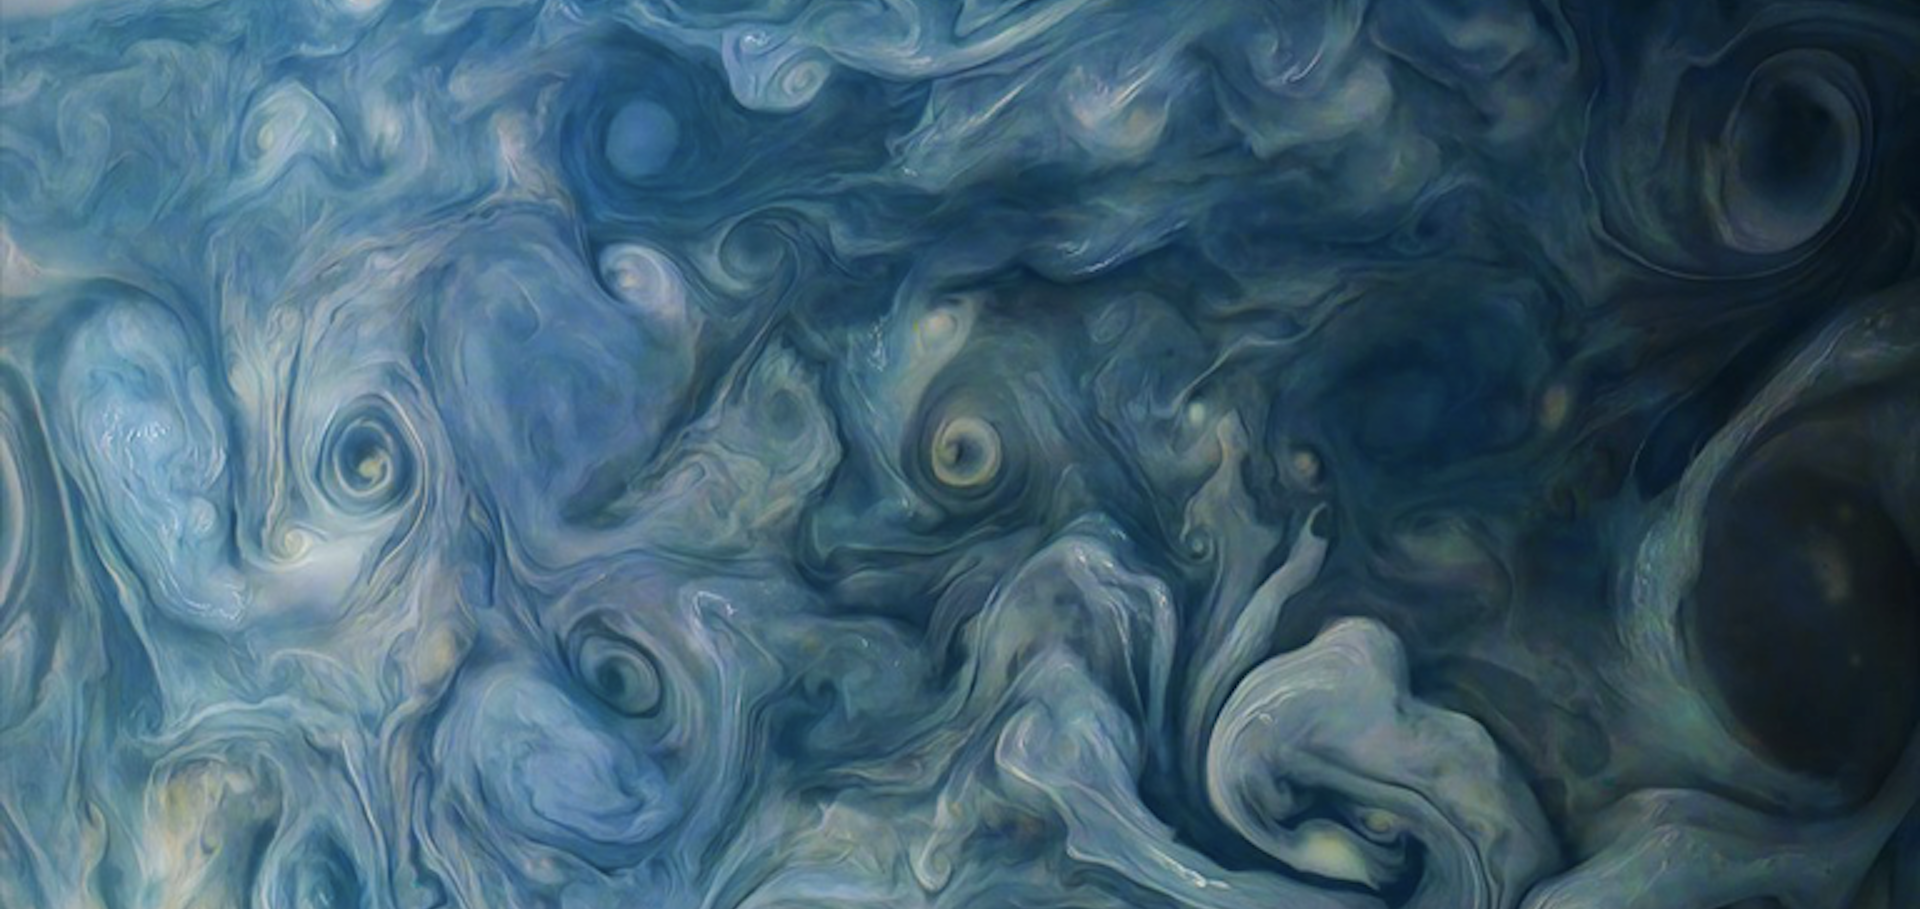 Jupiter's atmosphere